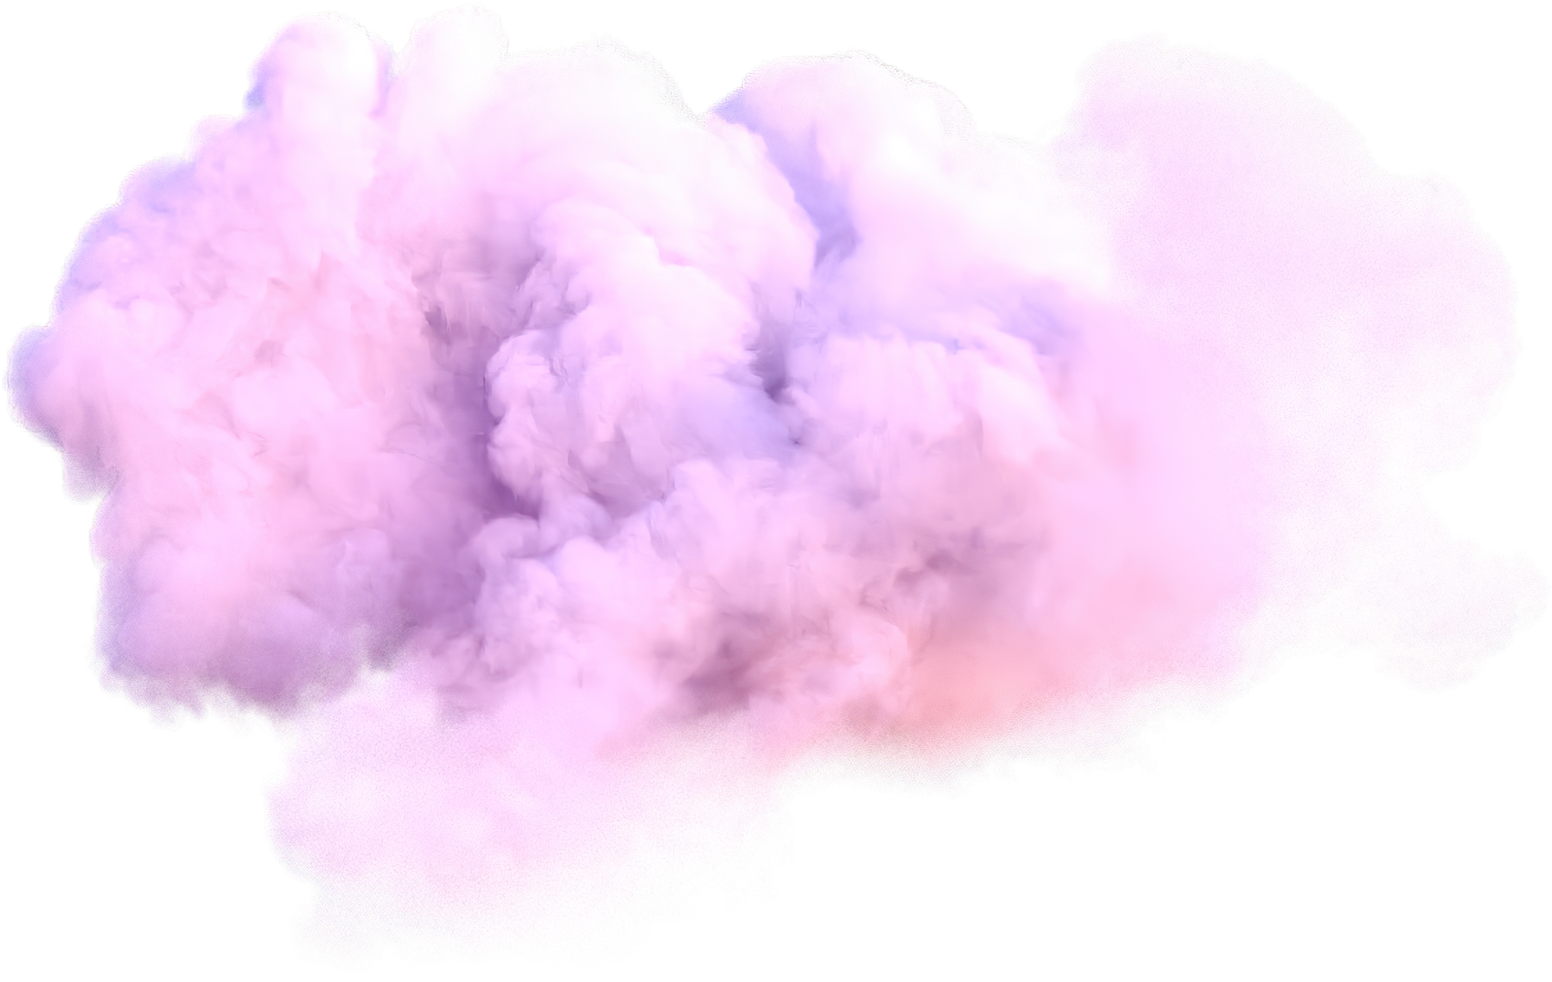 Realistic pink cloud.